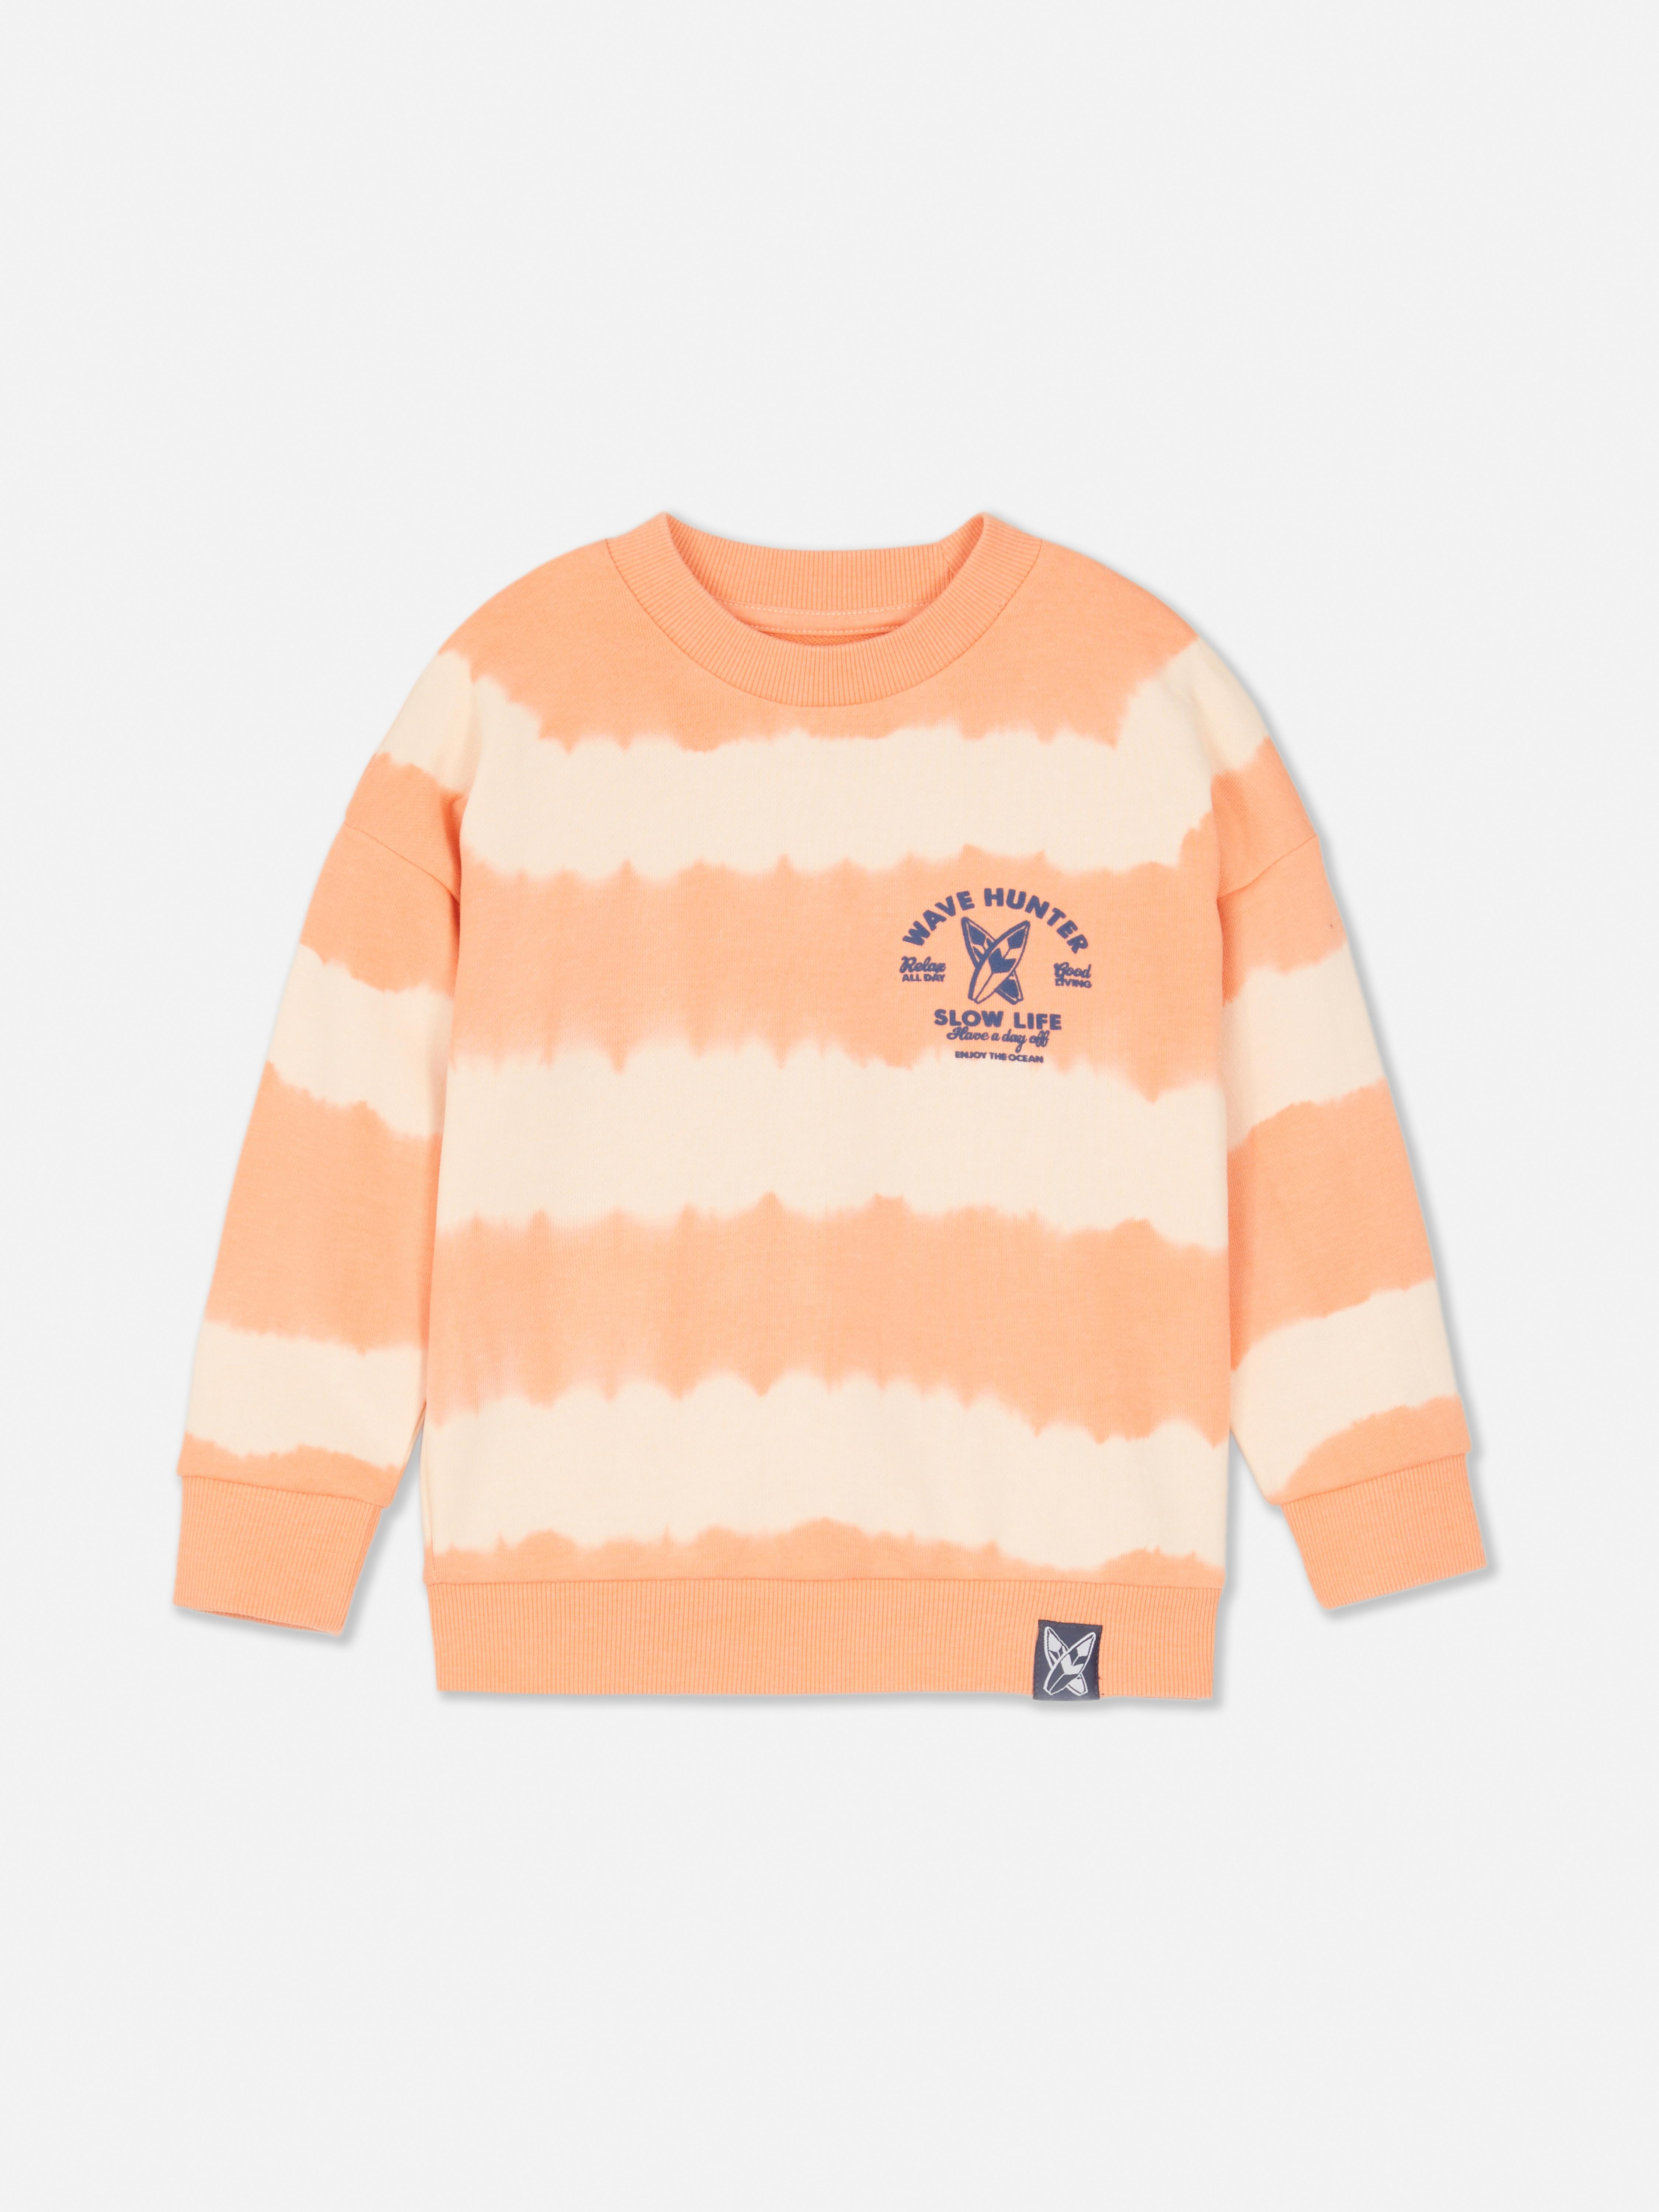 Wave Hunter Stripe Sweatshirt